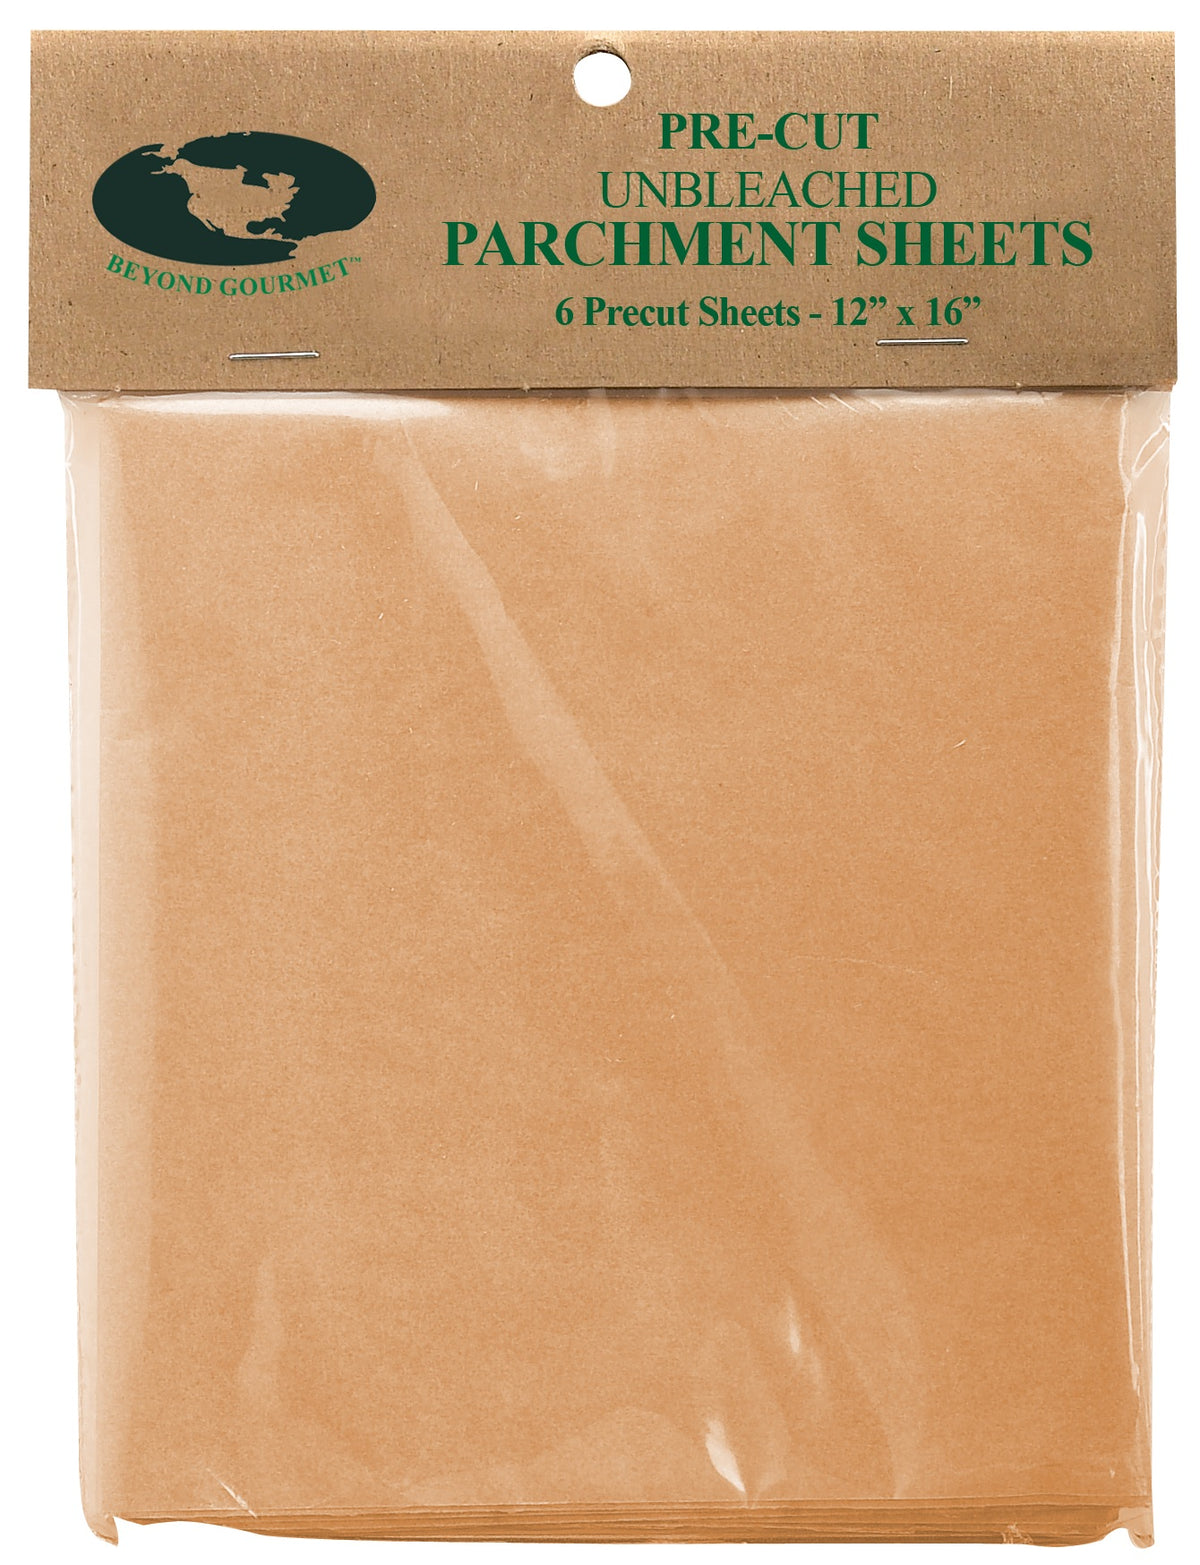 Beyond Gourmet 043 Precut Parchment Paper Sheet, 12" x 16"